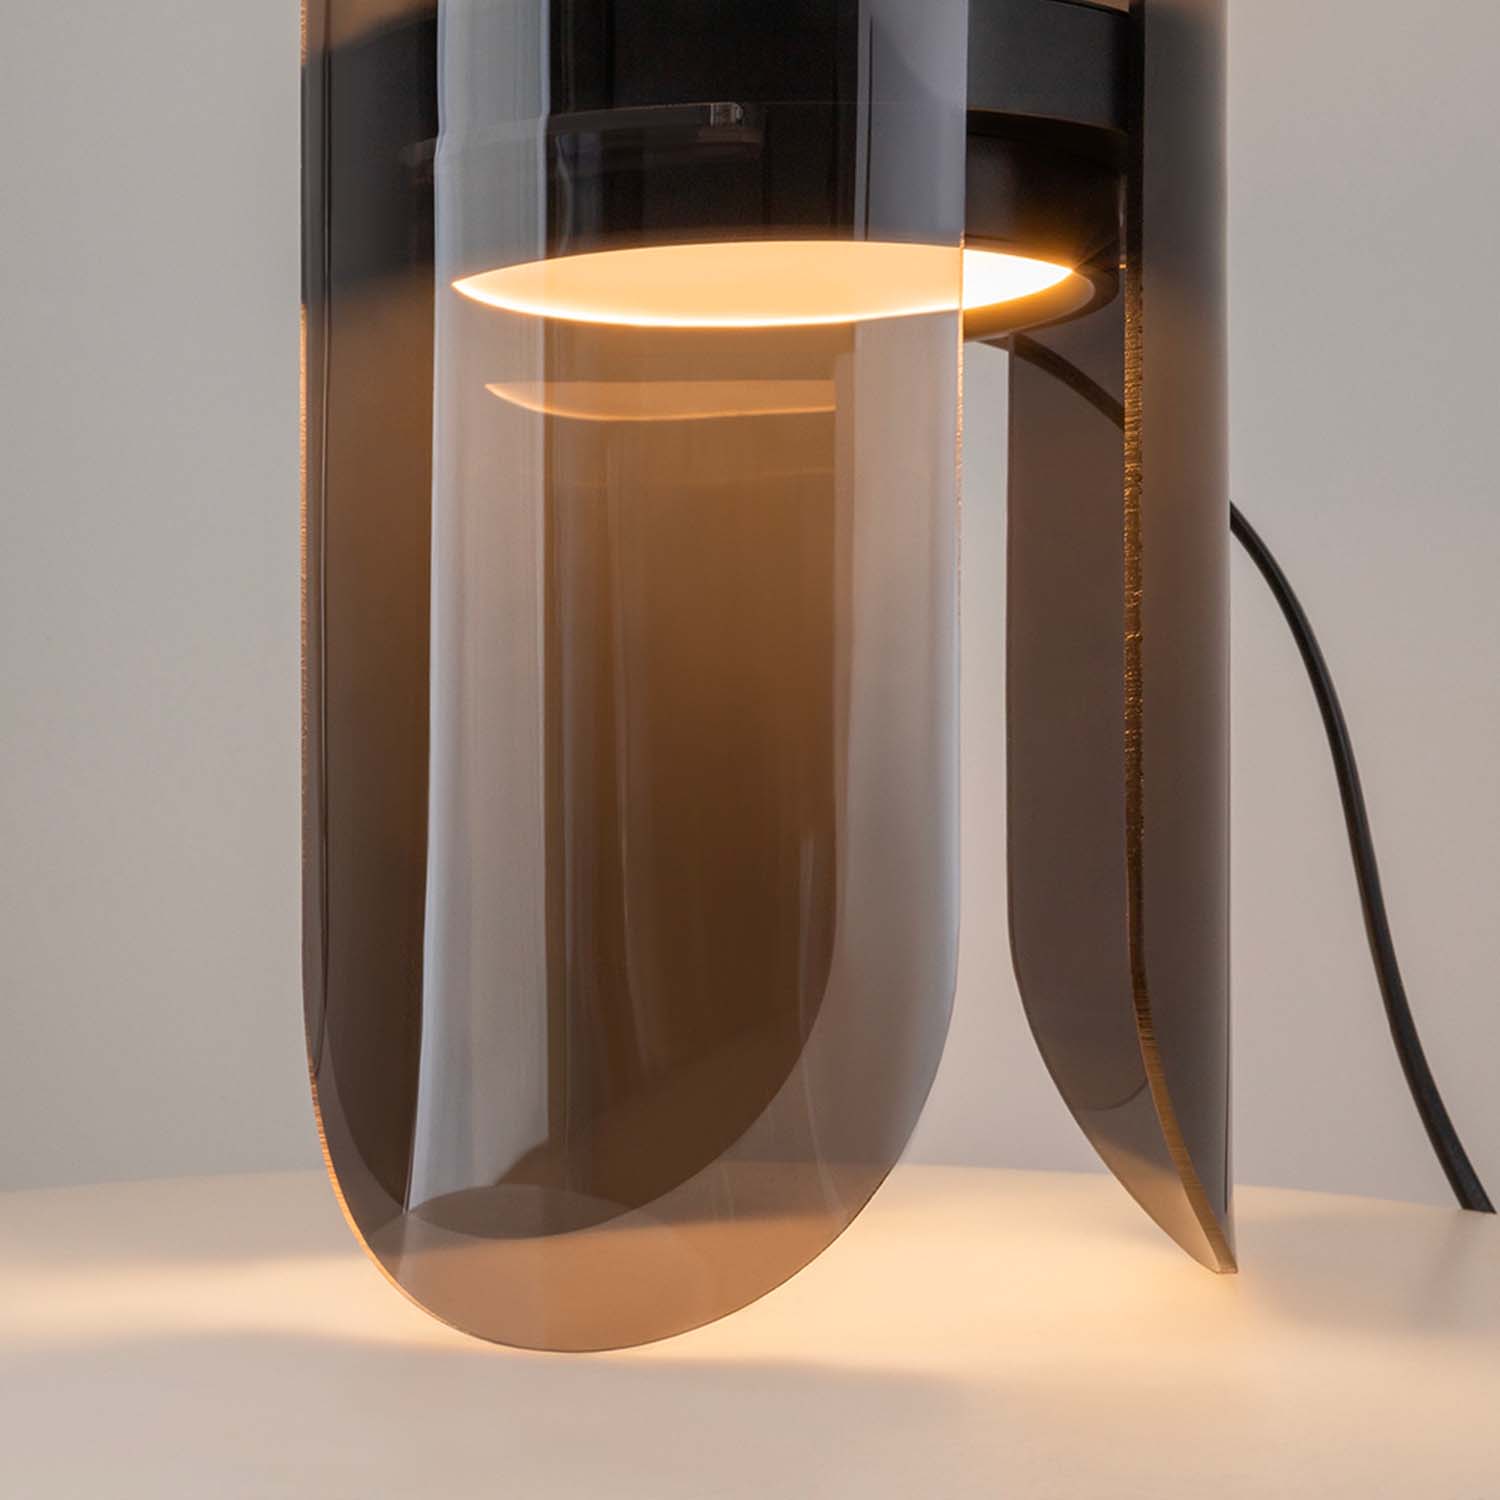 INSIGHT - Lampe à poser en plexiglass fumé design